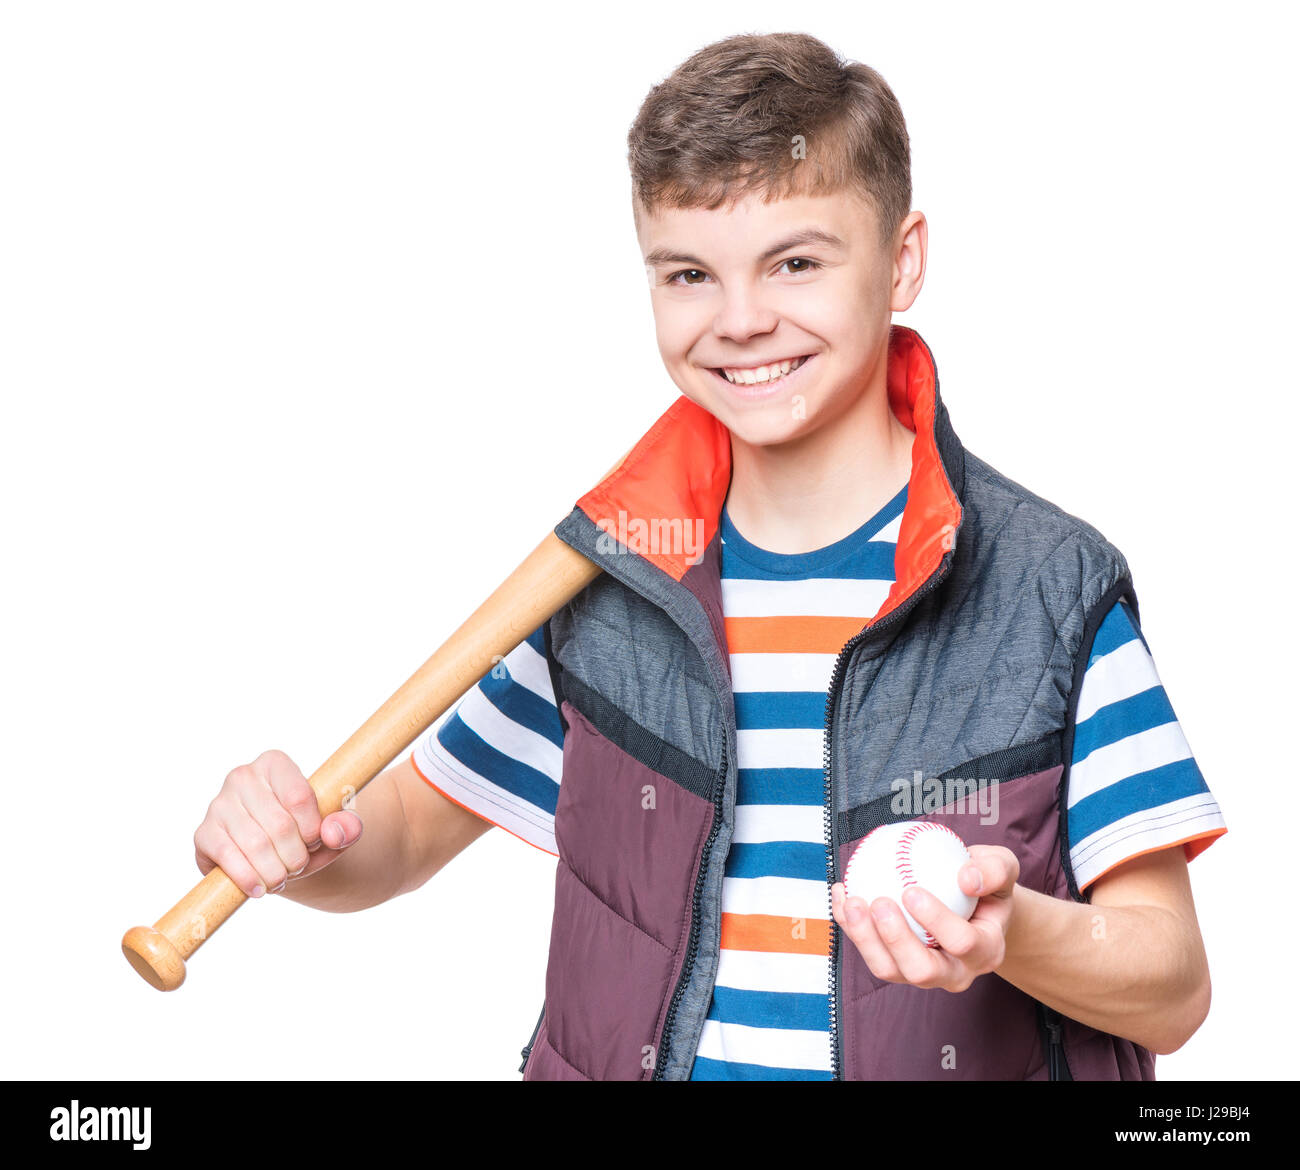 Teen boy with baseball bat Stock Photo